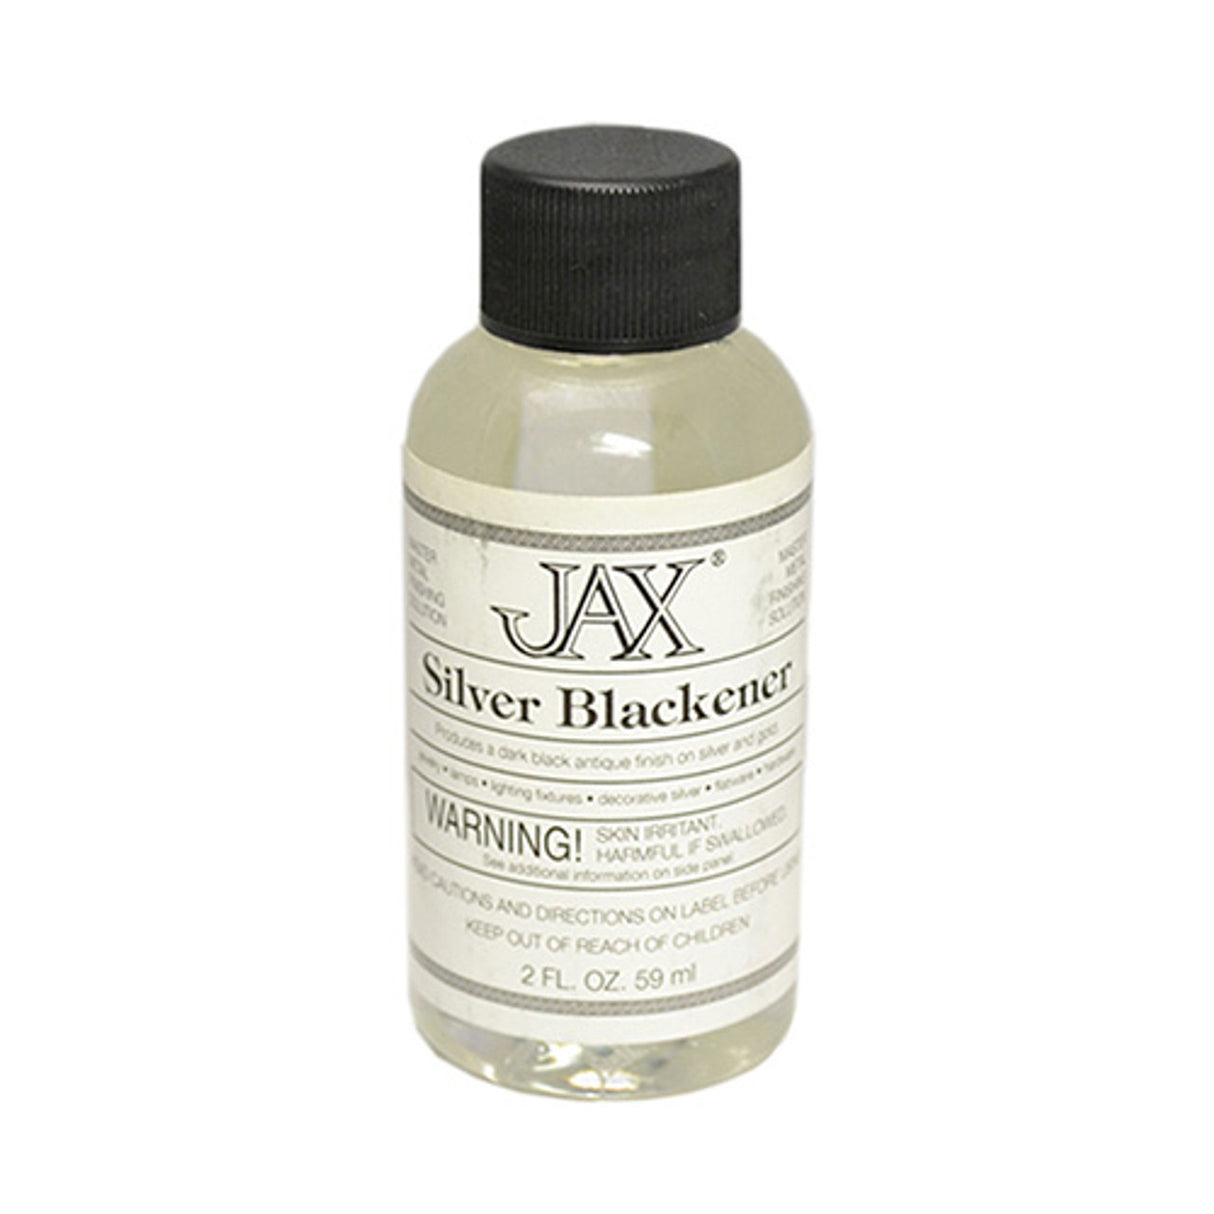 JAX Silver Blackener